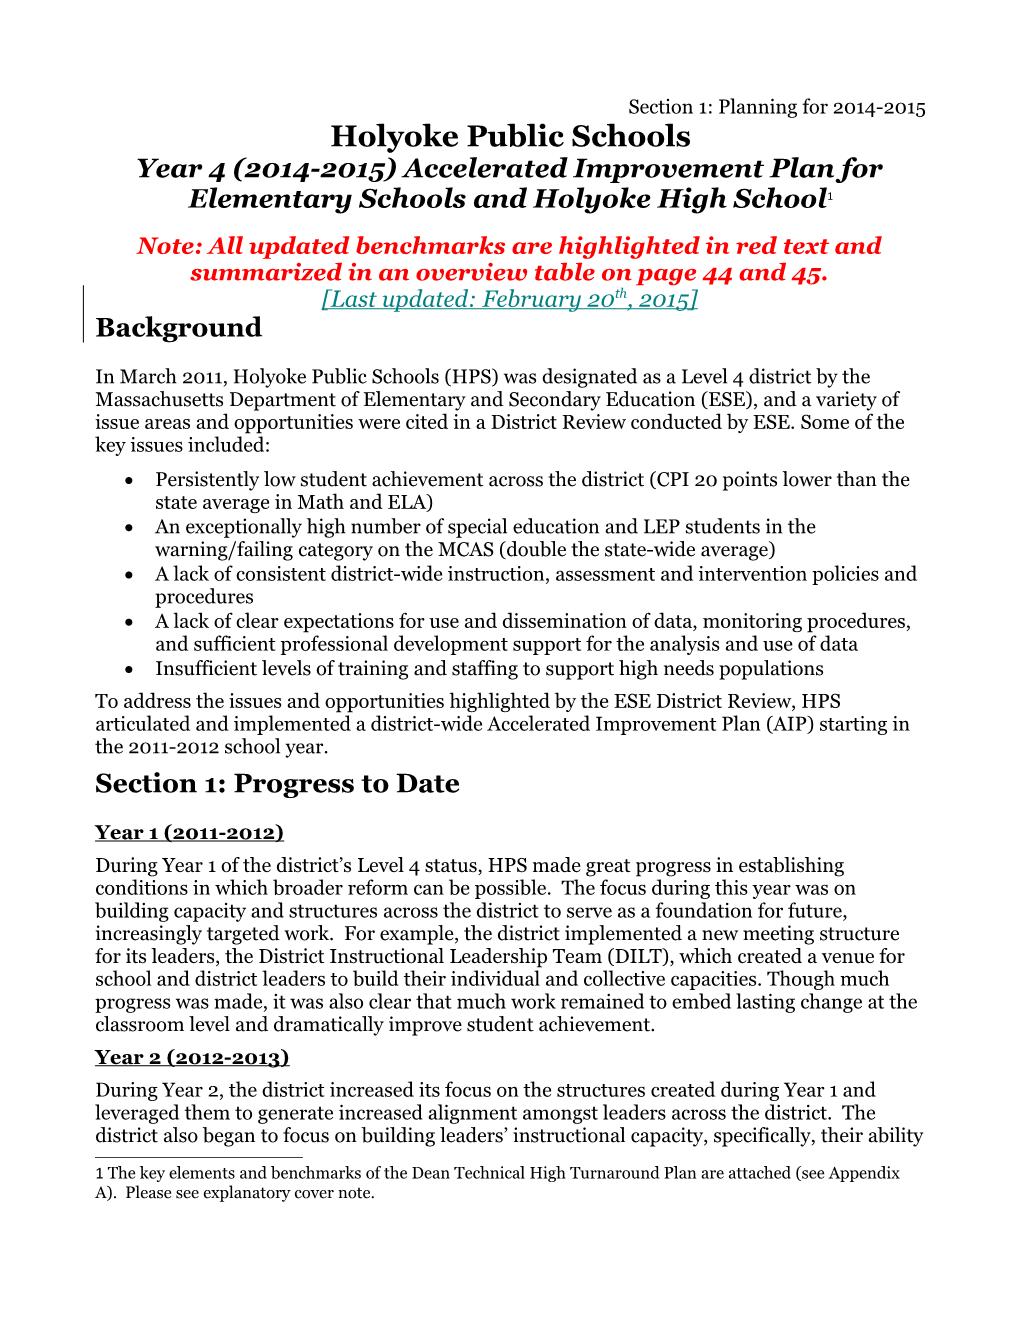 Holyoke Accelerated Improvement Plan 2014